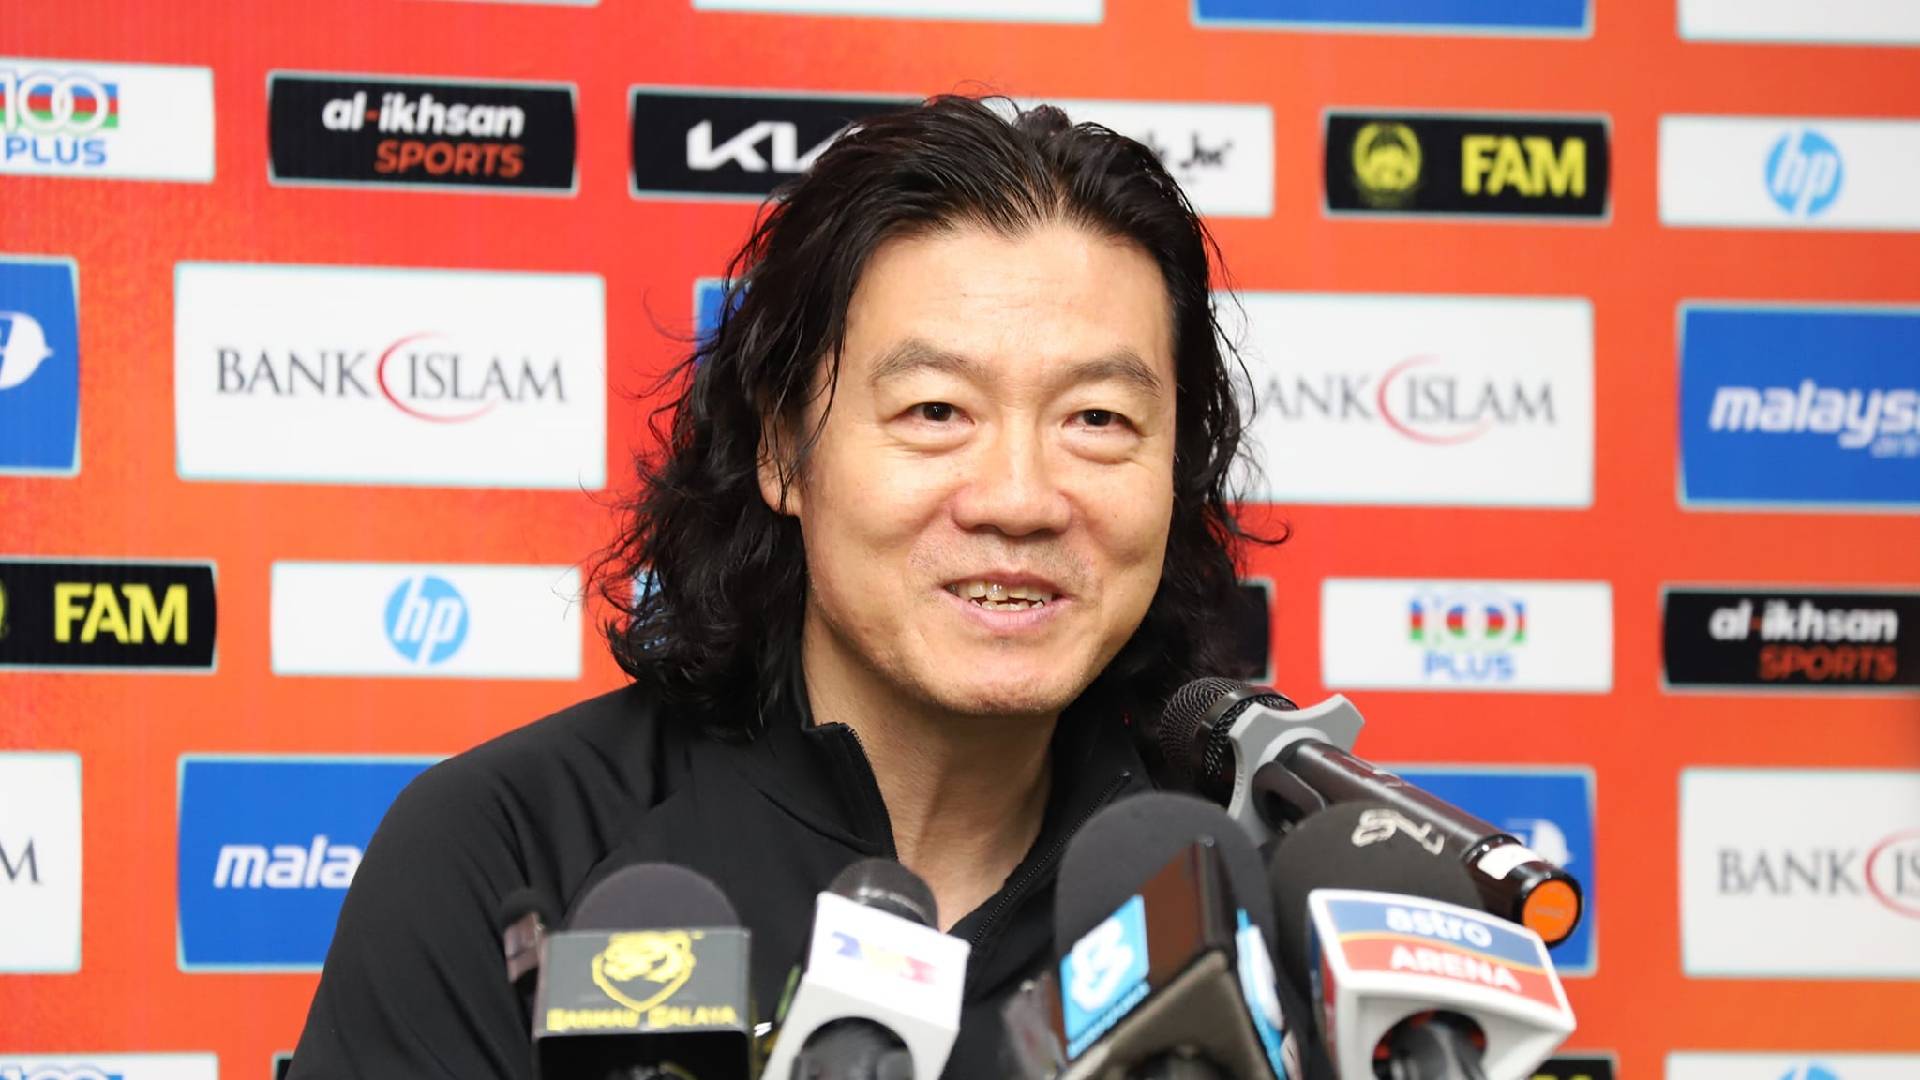 Kim Pan gon FA Malaysia 3 Kim Pan-gon Mahu Harimau Malaya Mendominasi Berdepan Hong Kong